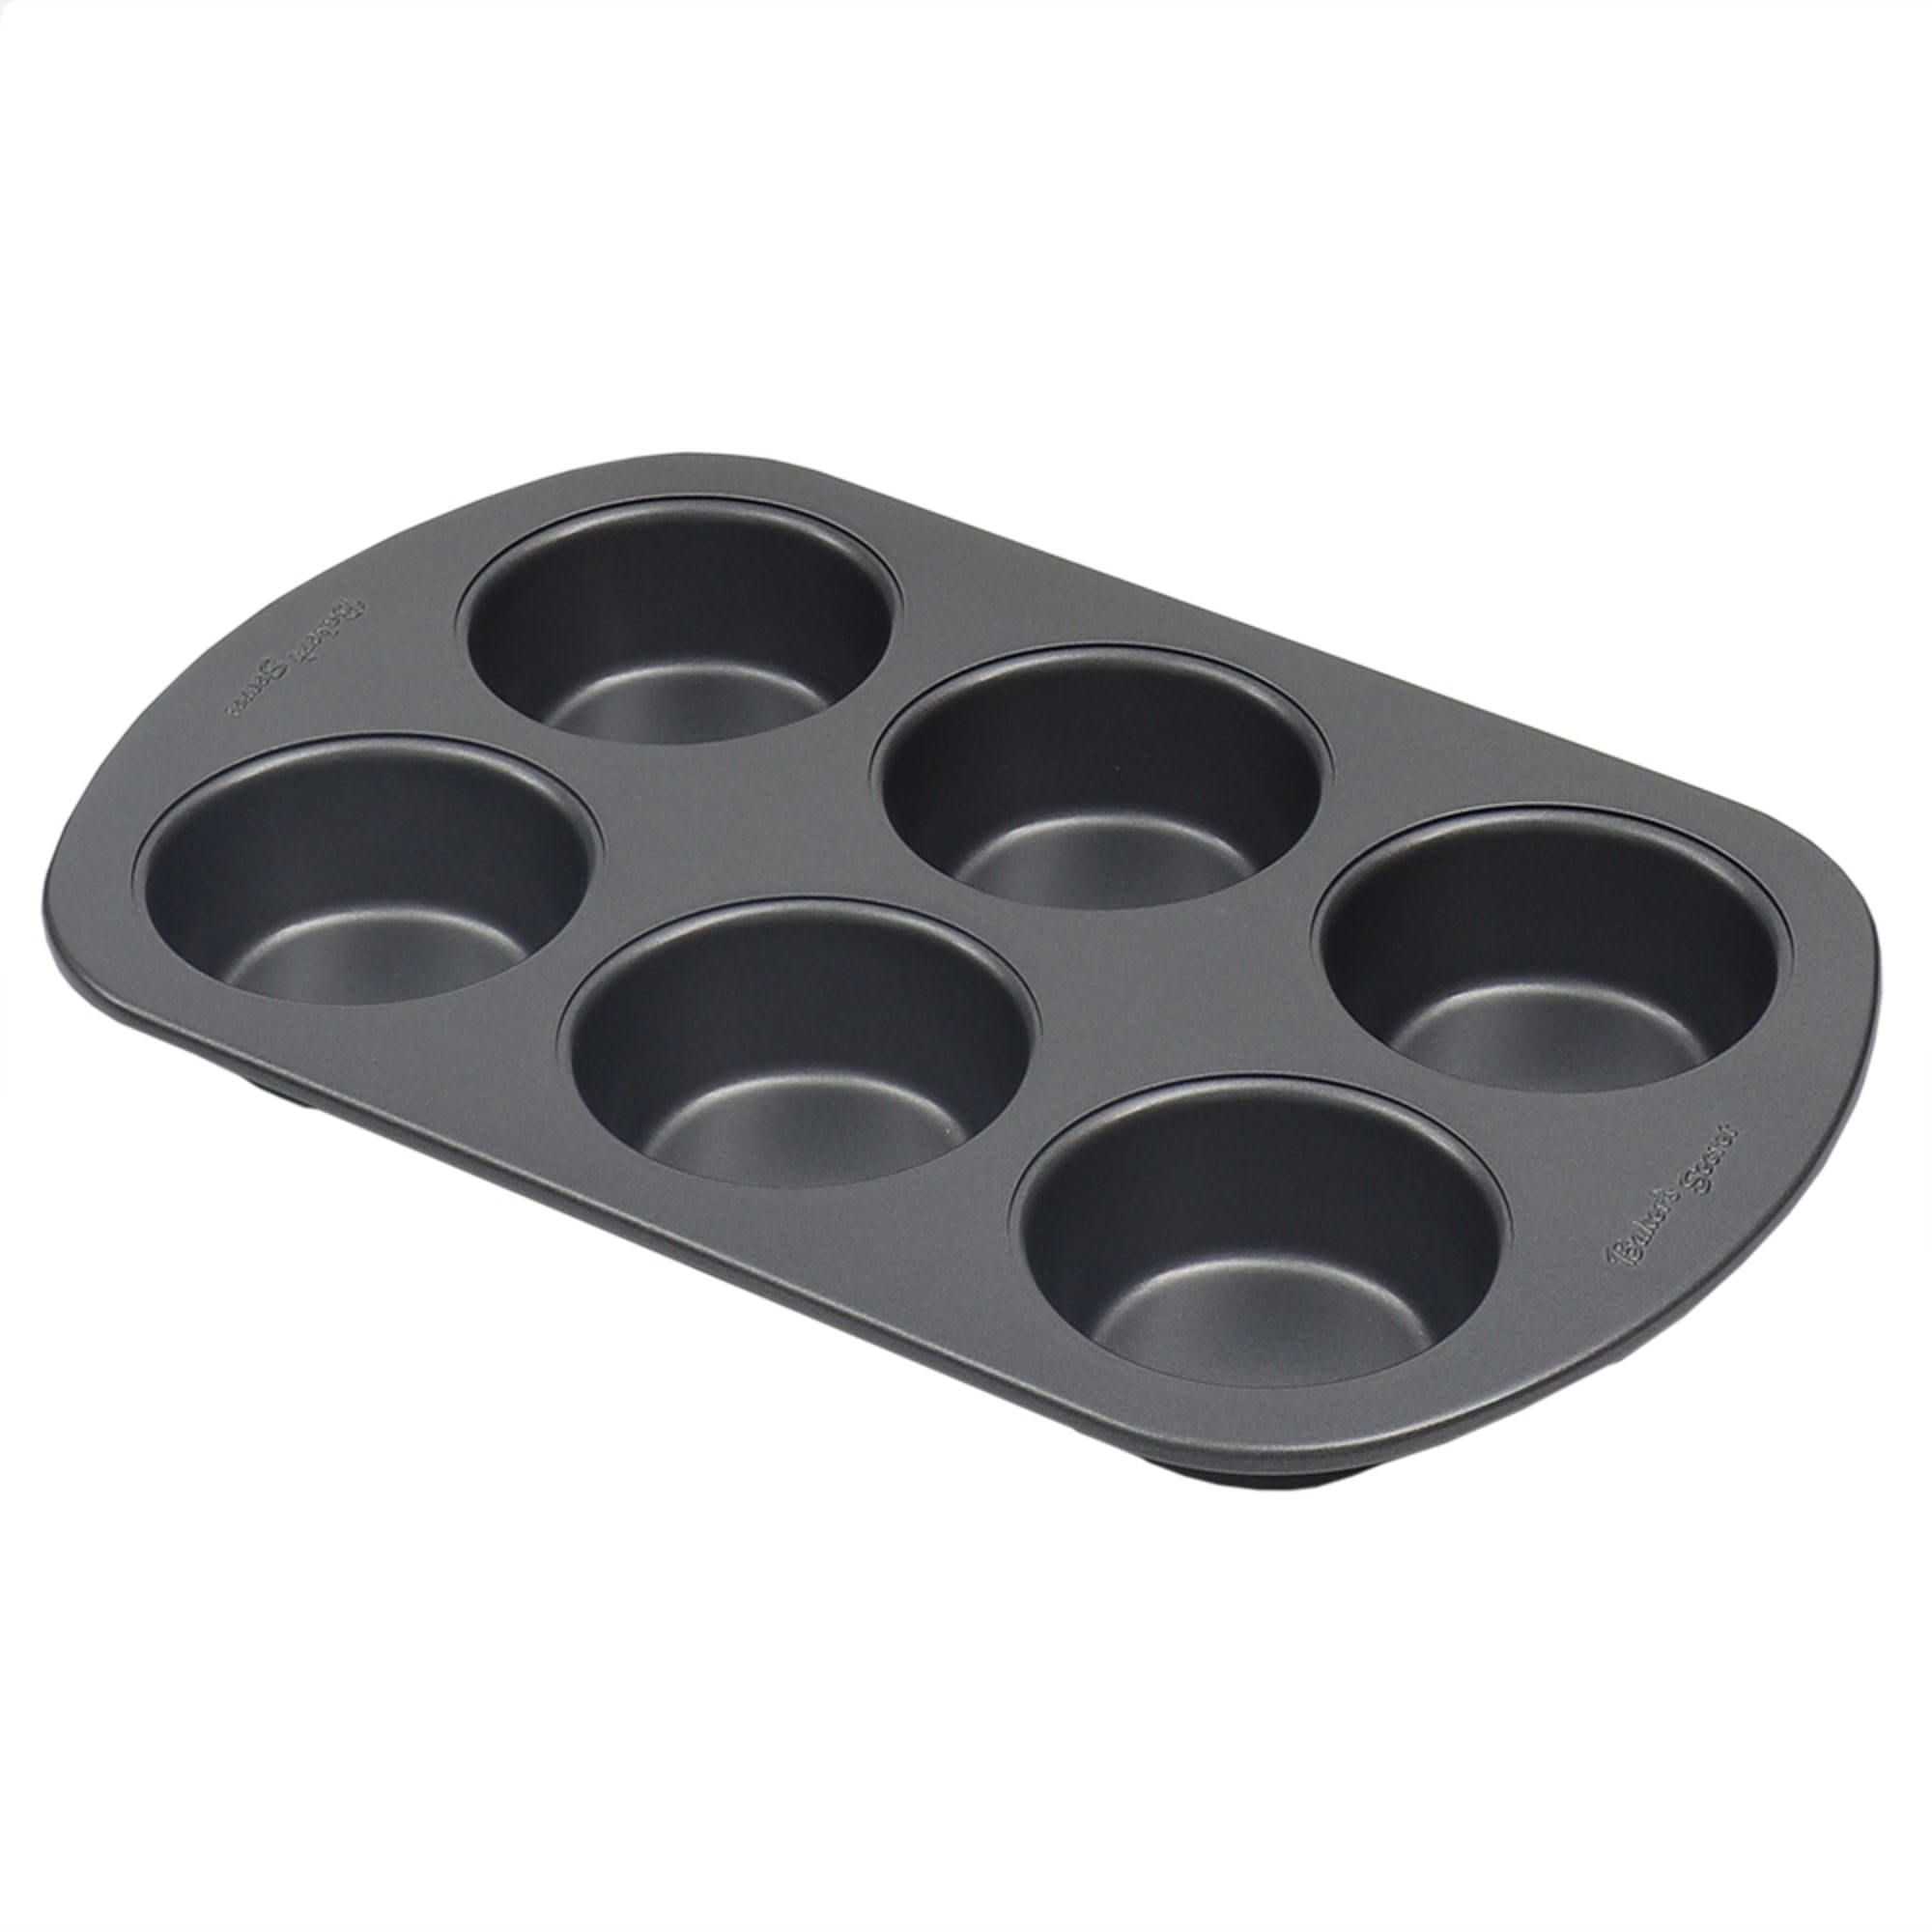 Bakers Secret Essentials 6-Cup Optimum Non-Stick Steel Muffin Pan $6.00 EACH, CASE PACK OF 12